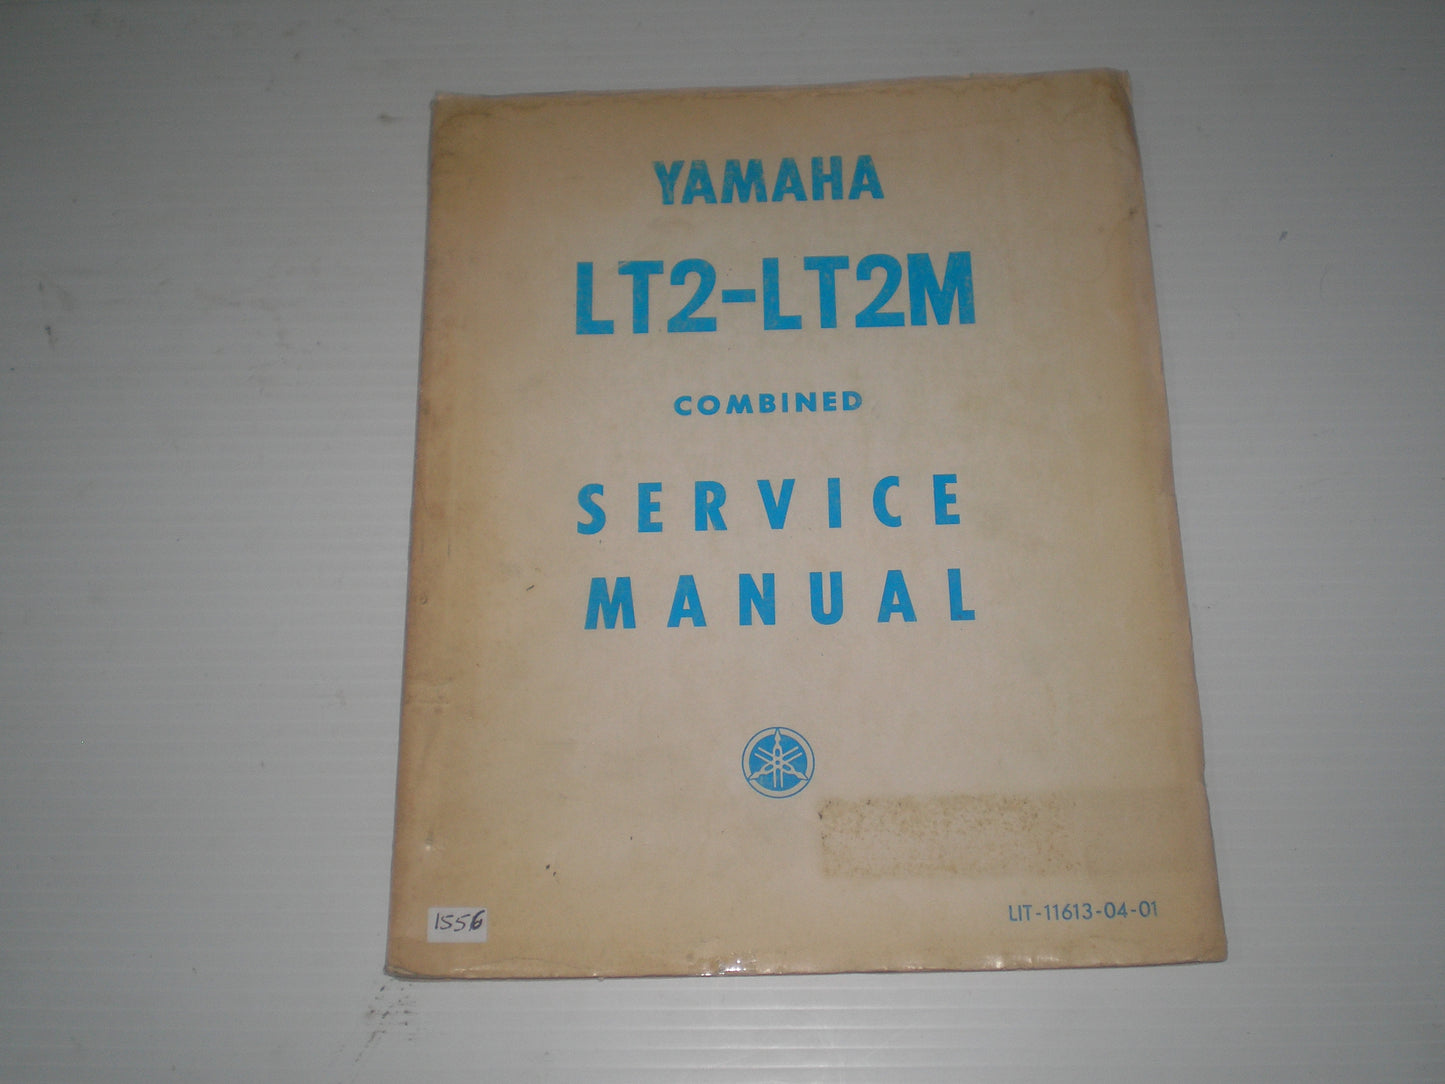 YAMAHA LT2  LT2M 1973  Service Manual  LIT-11613-04-01  #1556